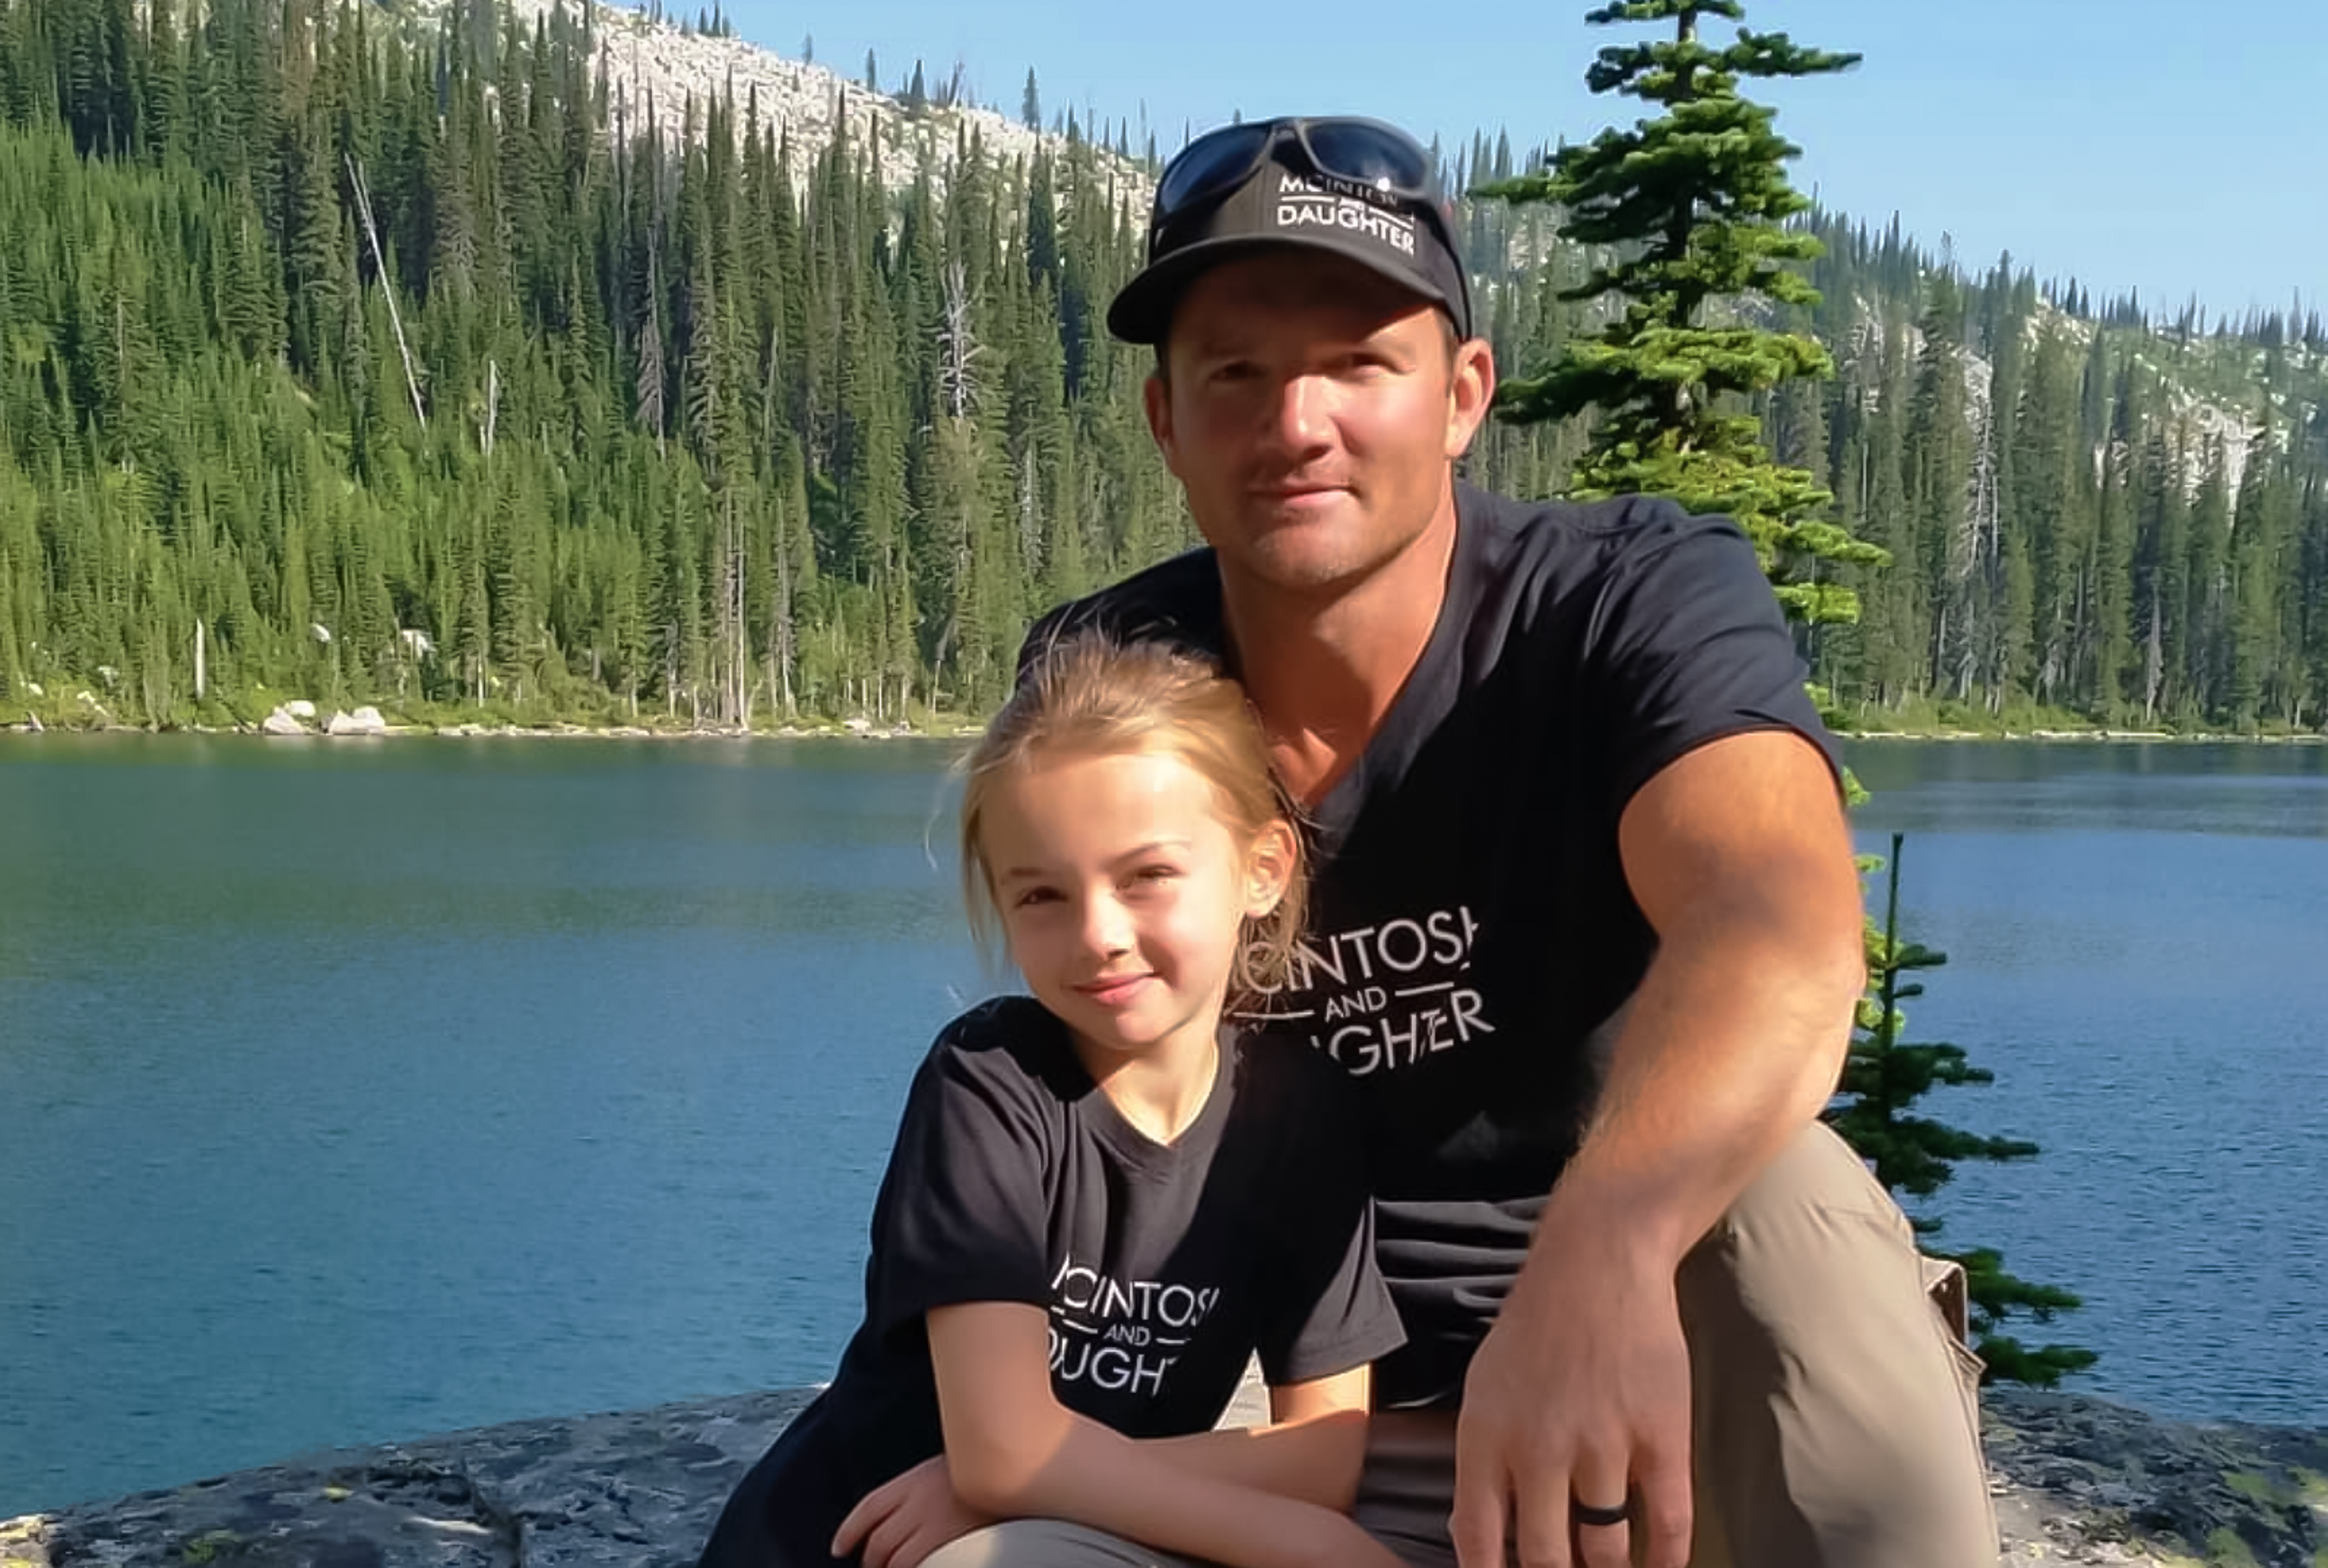 Man and daughter wearing matching shirts by a lake